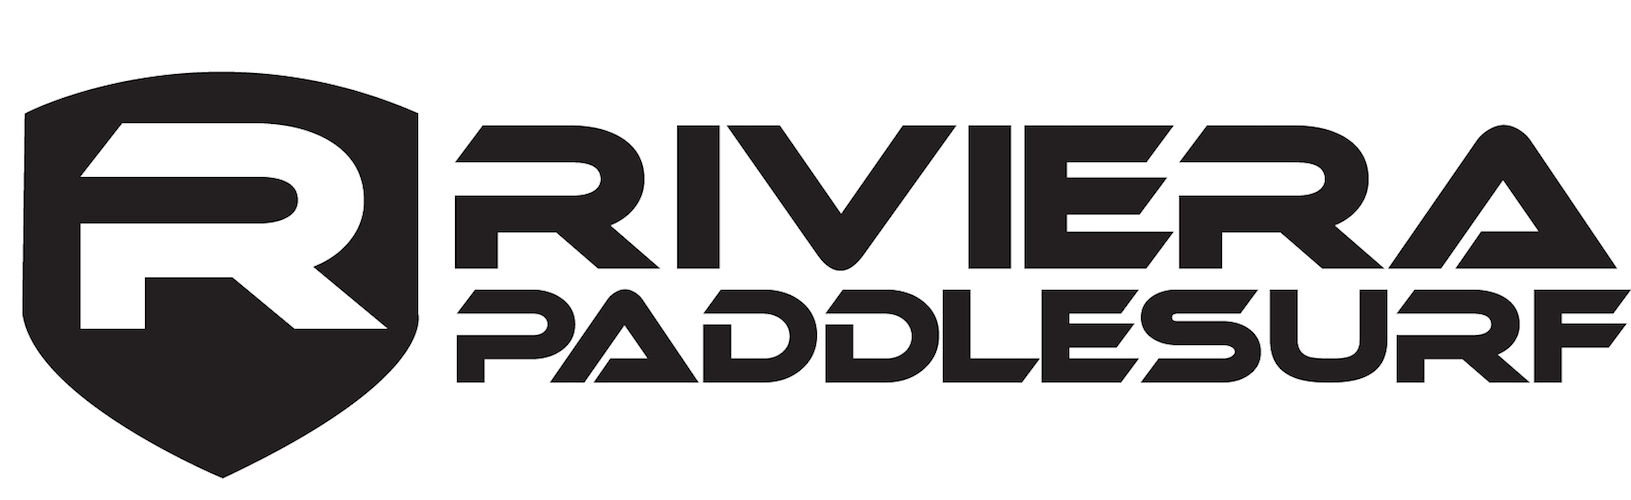 Riviera-Paddle-Surfing.jpg